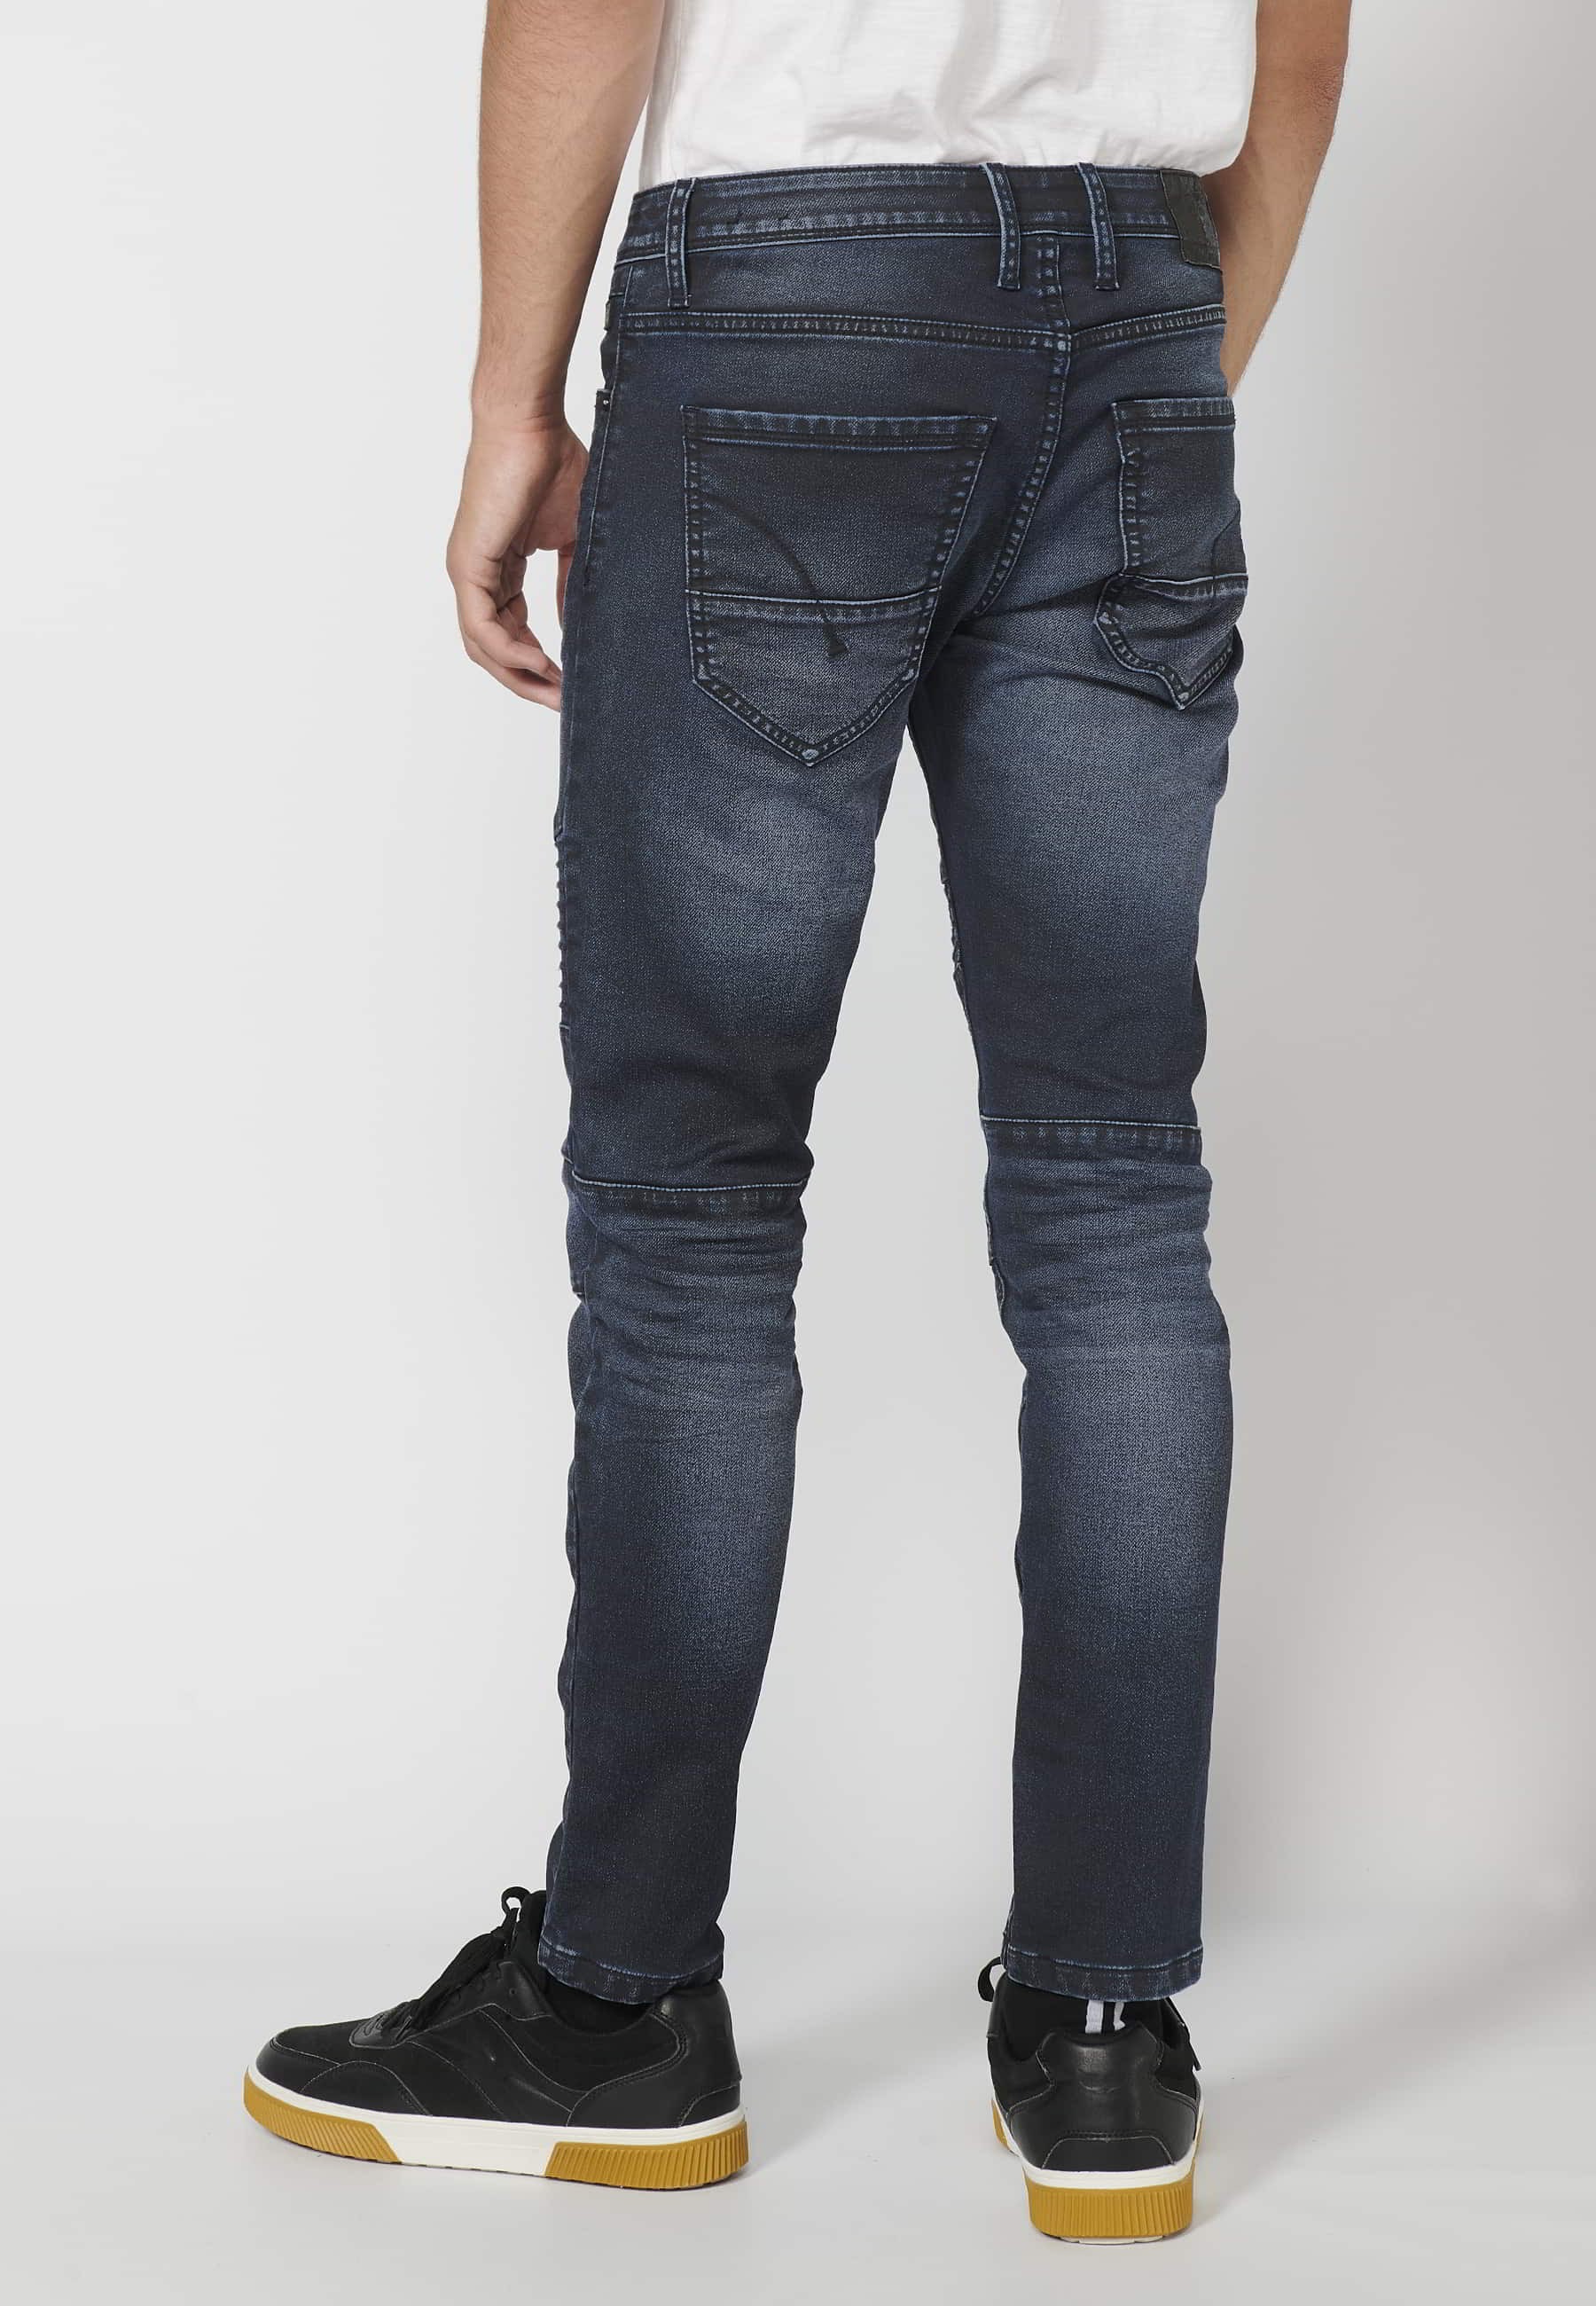 Pantalons llargs Jean skinny fit color blau fosc per a Home 3